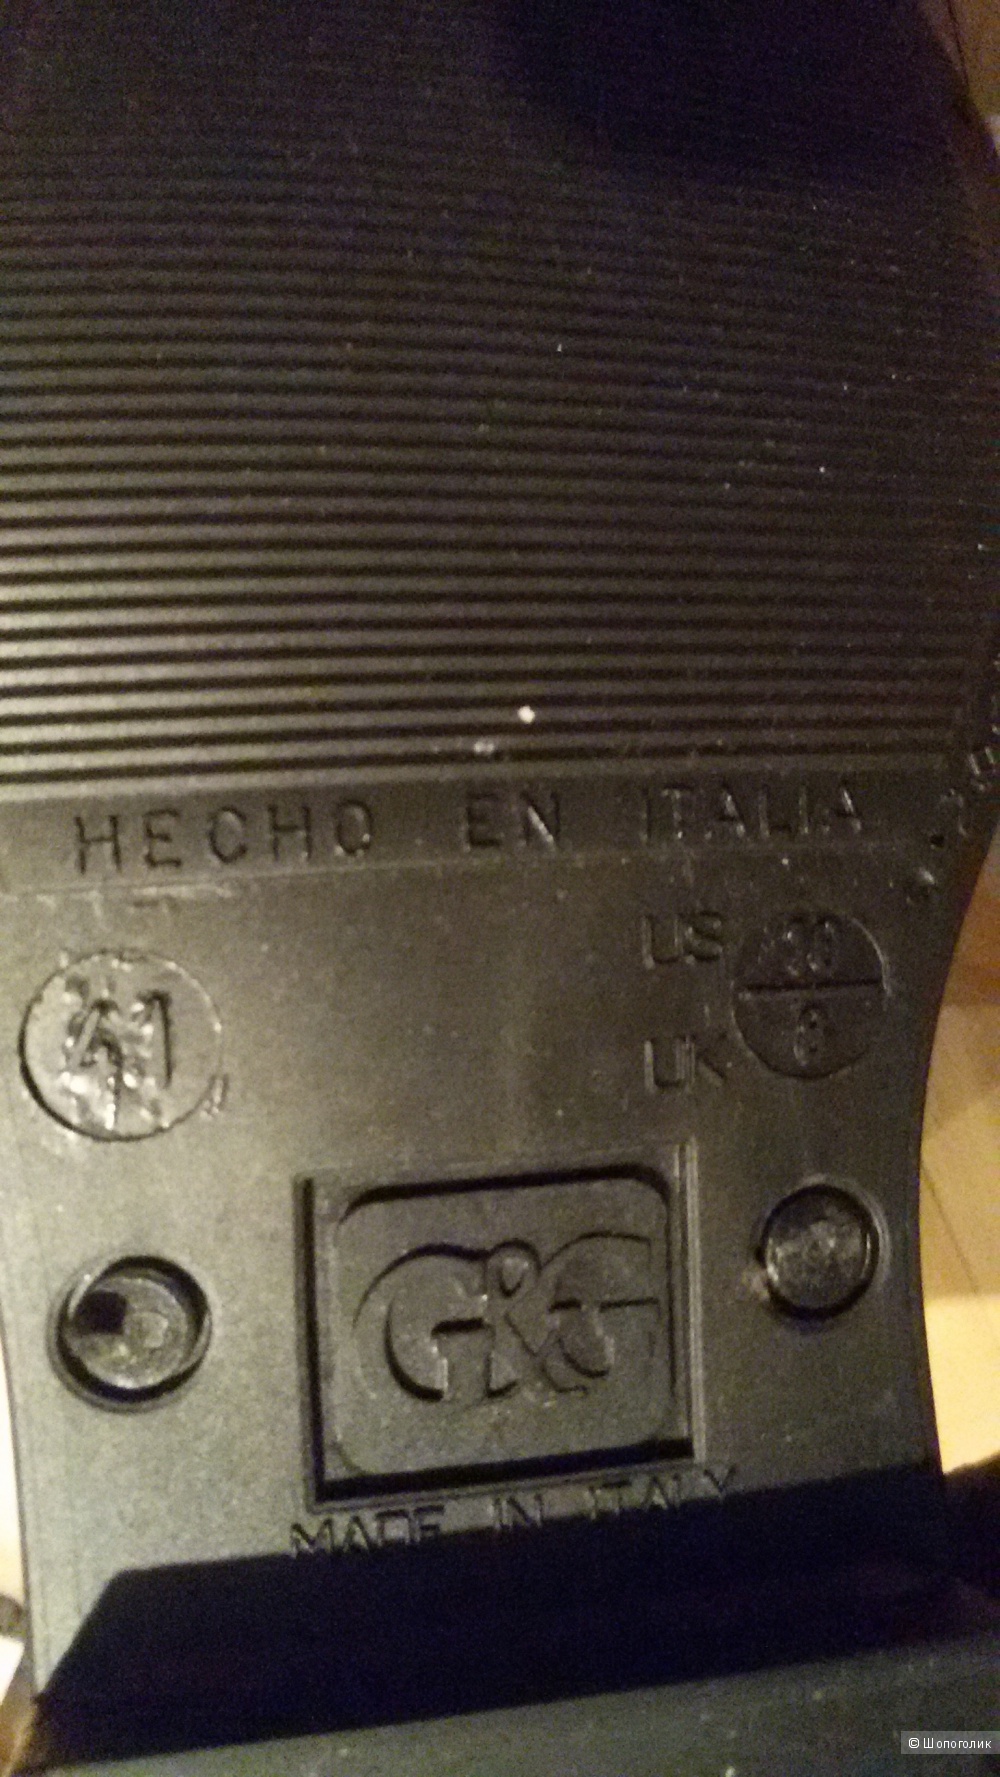 Сапоги резиновые «HECHO” G&G by Italy, 41 (на 40) размер.